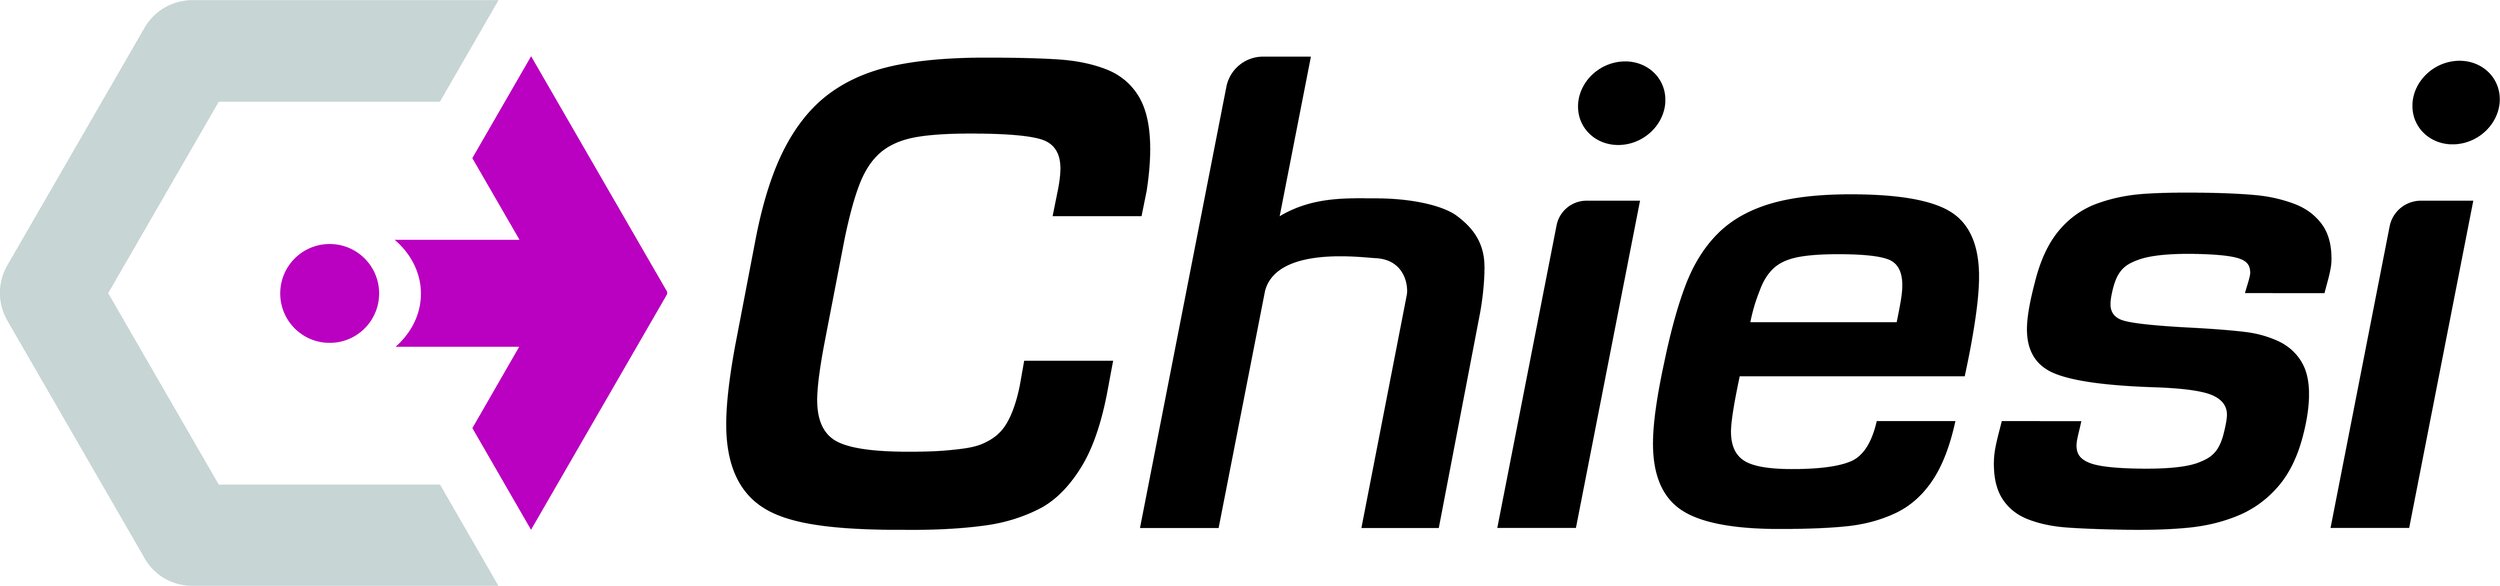 Chiesi Logo - 1.Primary (1) (002).jpg